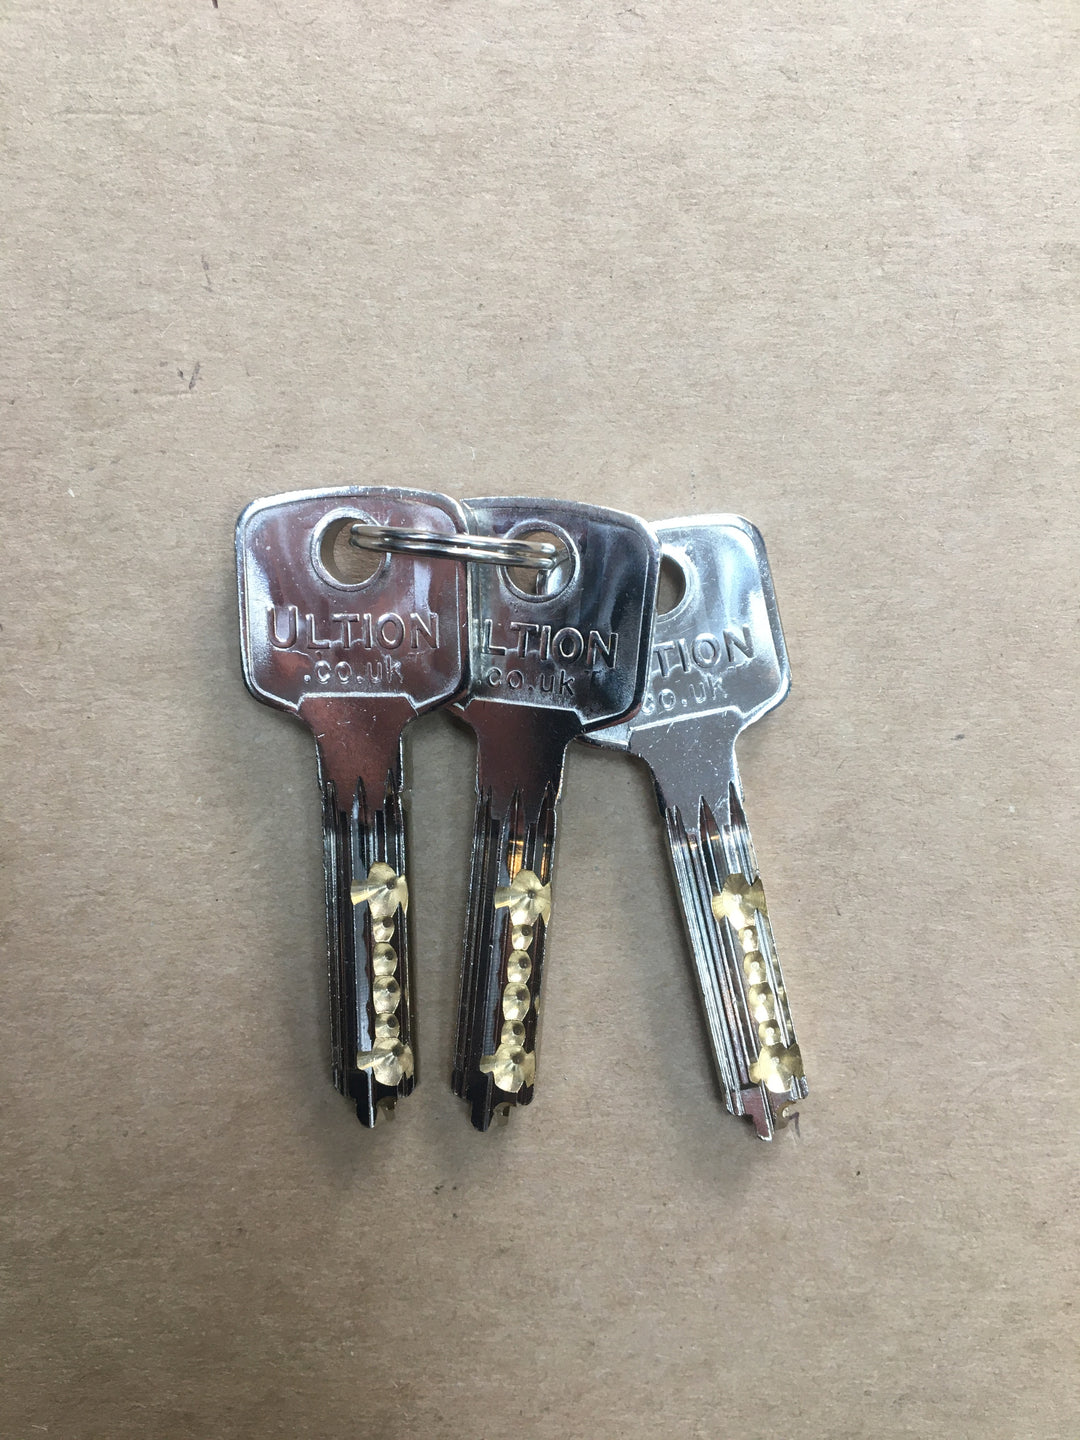 Ultion keys cut